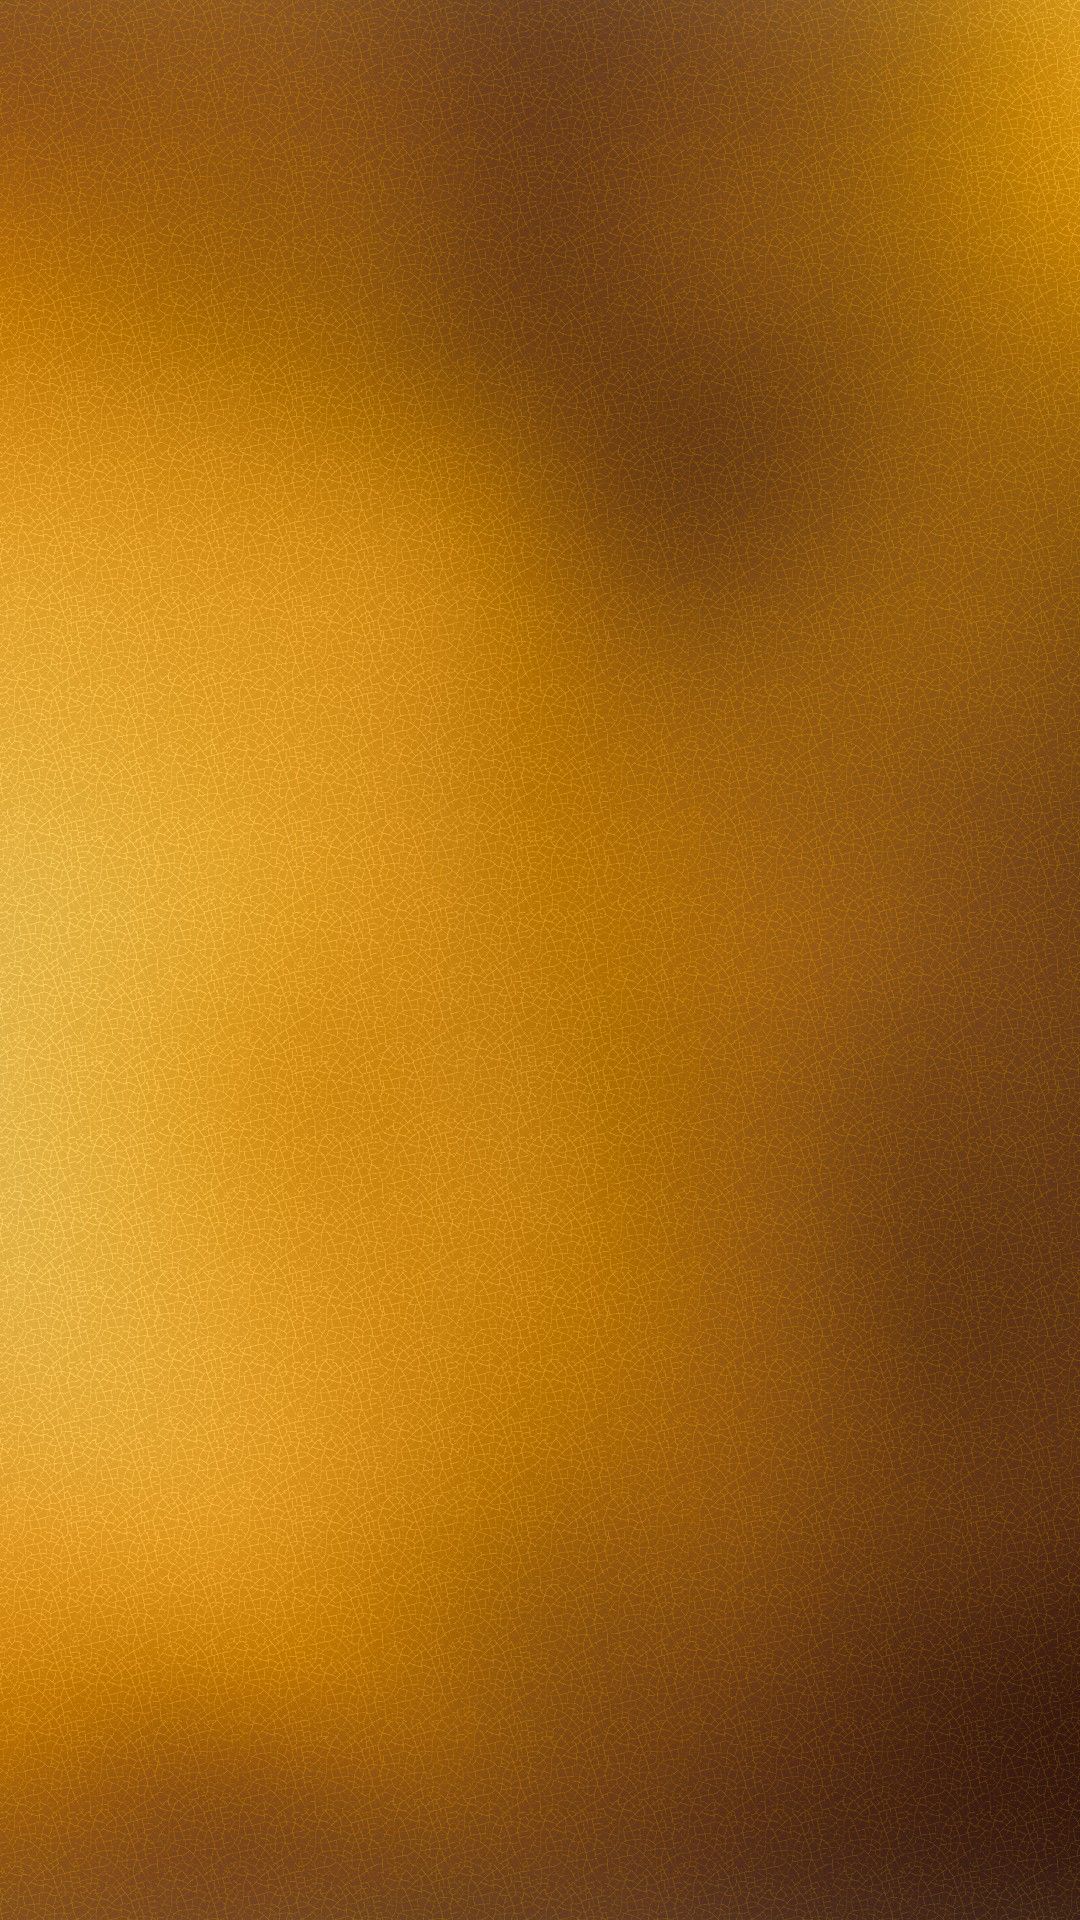 papel tapiz de color dorado,amarillo,naranja,cielo,ámbar,marrón